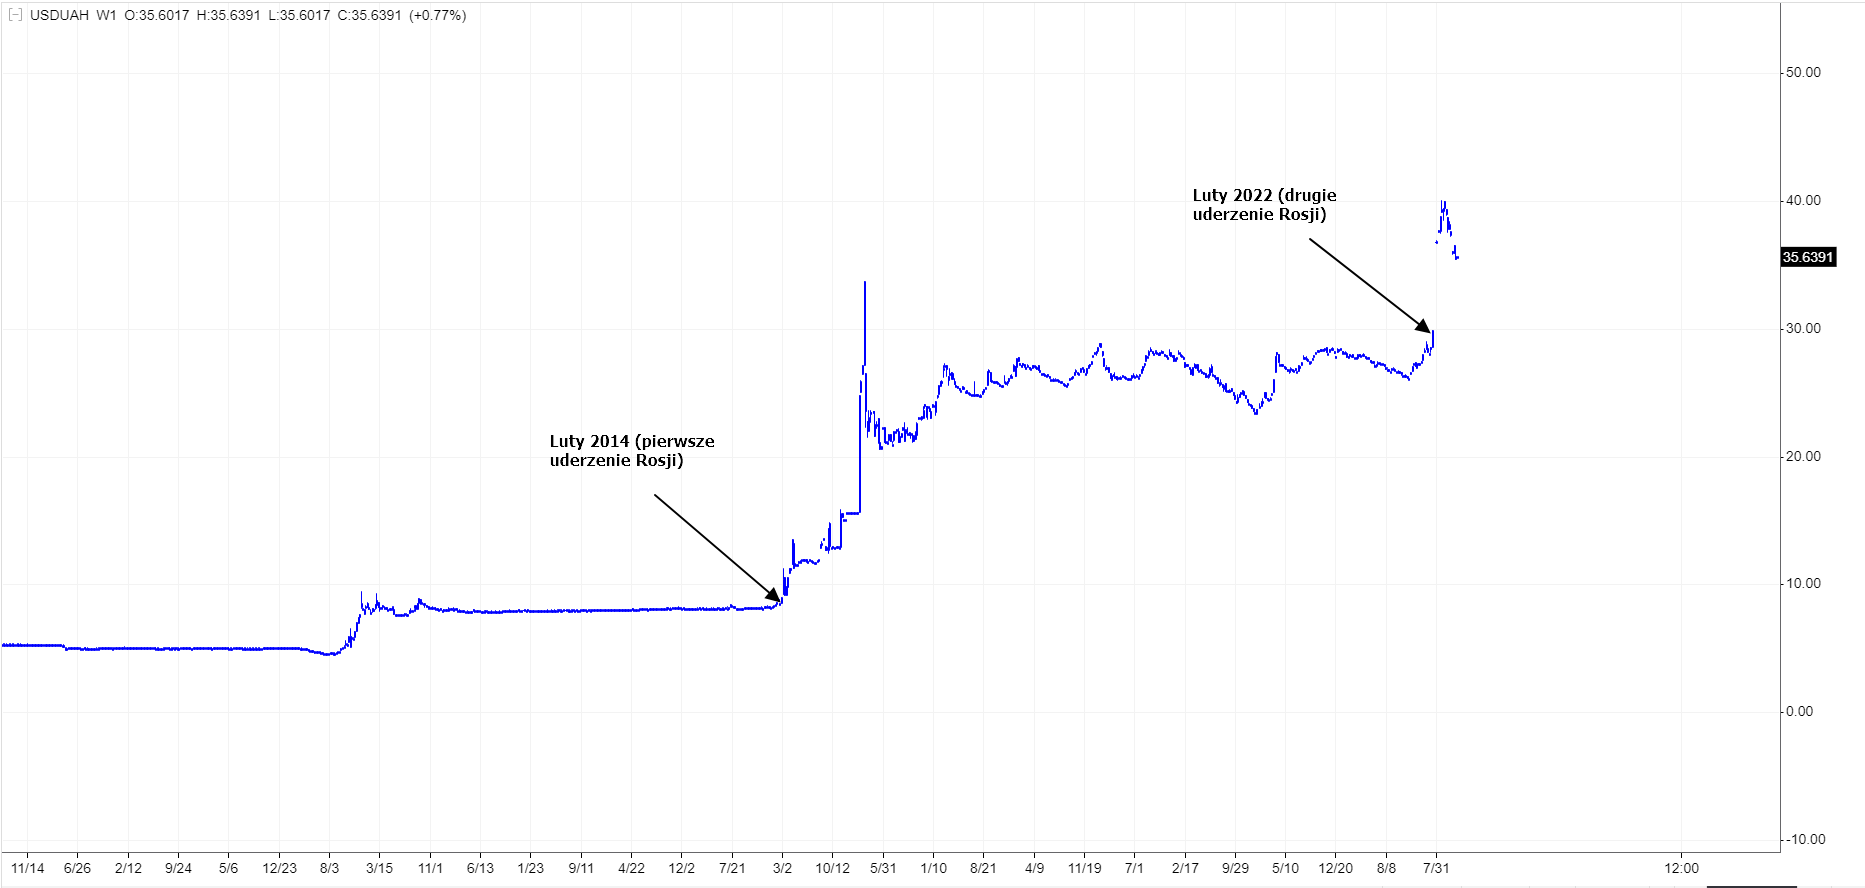 Wykres dolara: USD/UAH